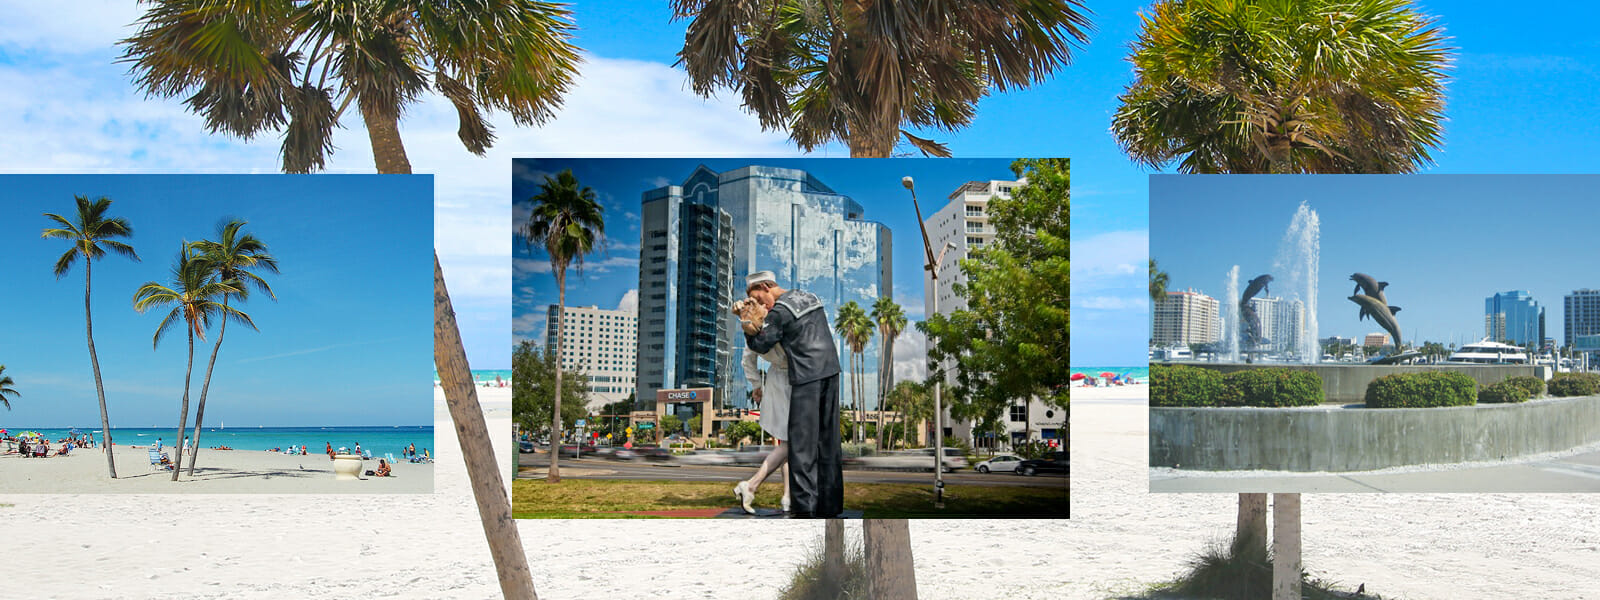 Realtors in the Florida Area | Live Sarasota | Team Rothschild